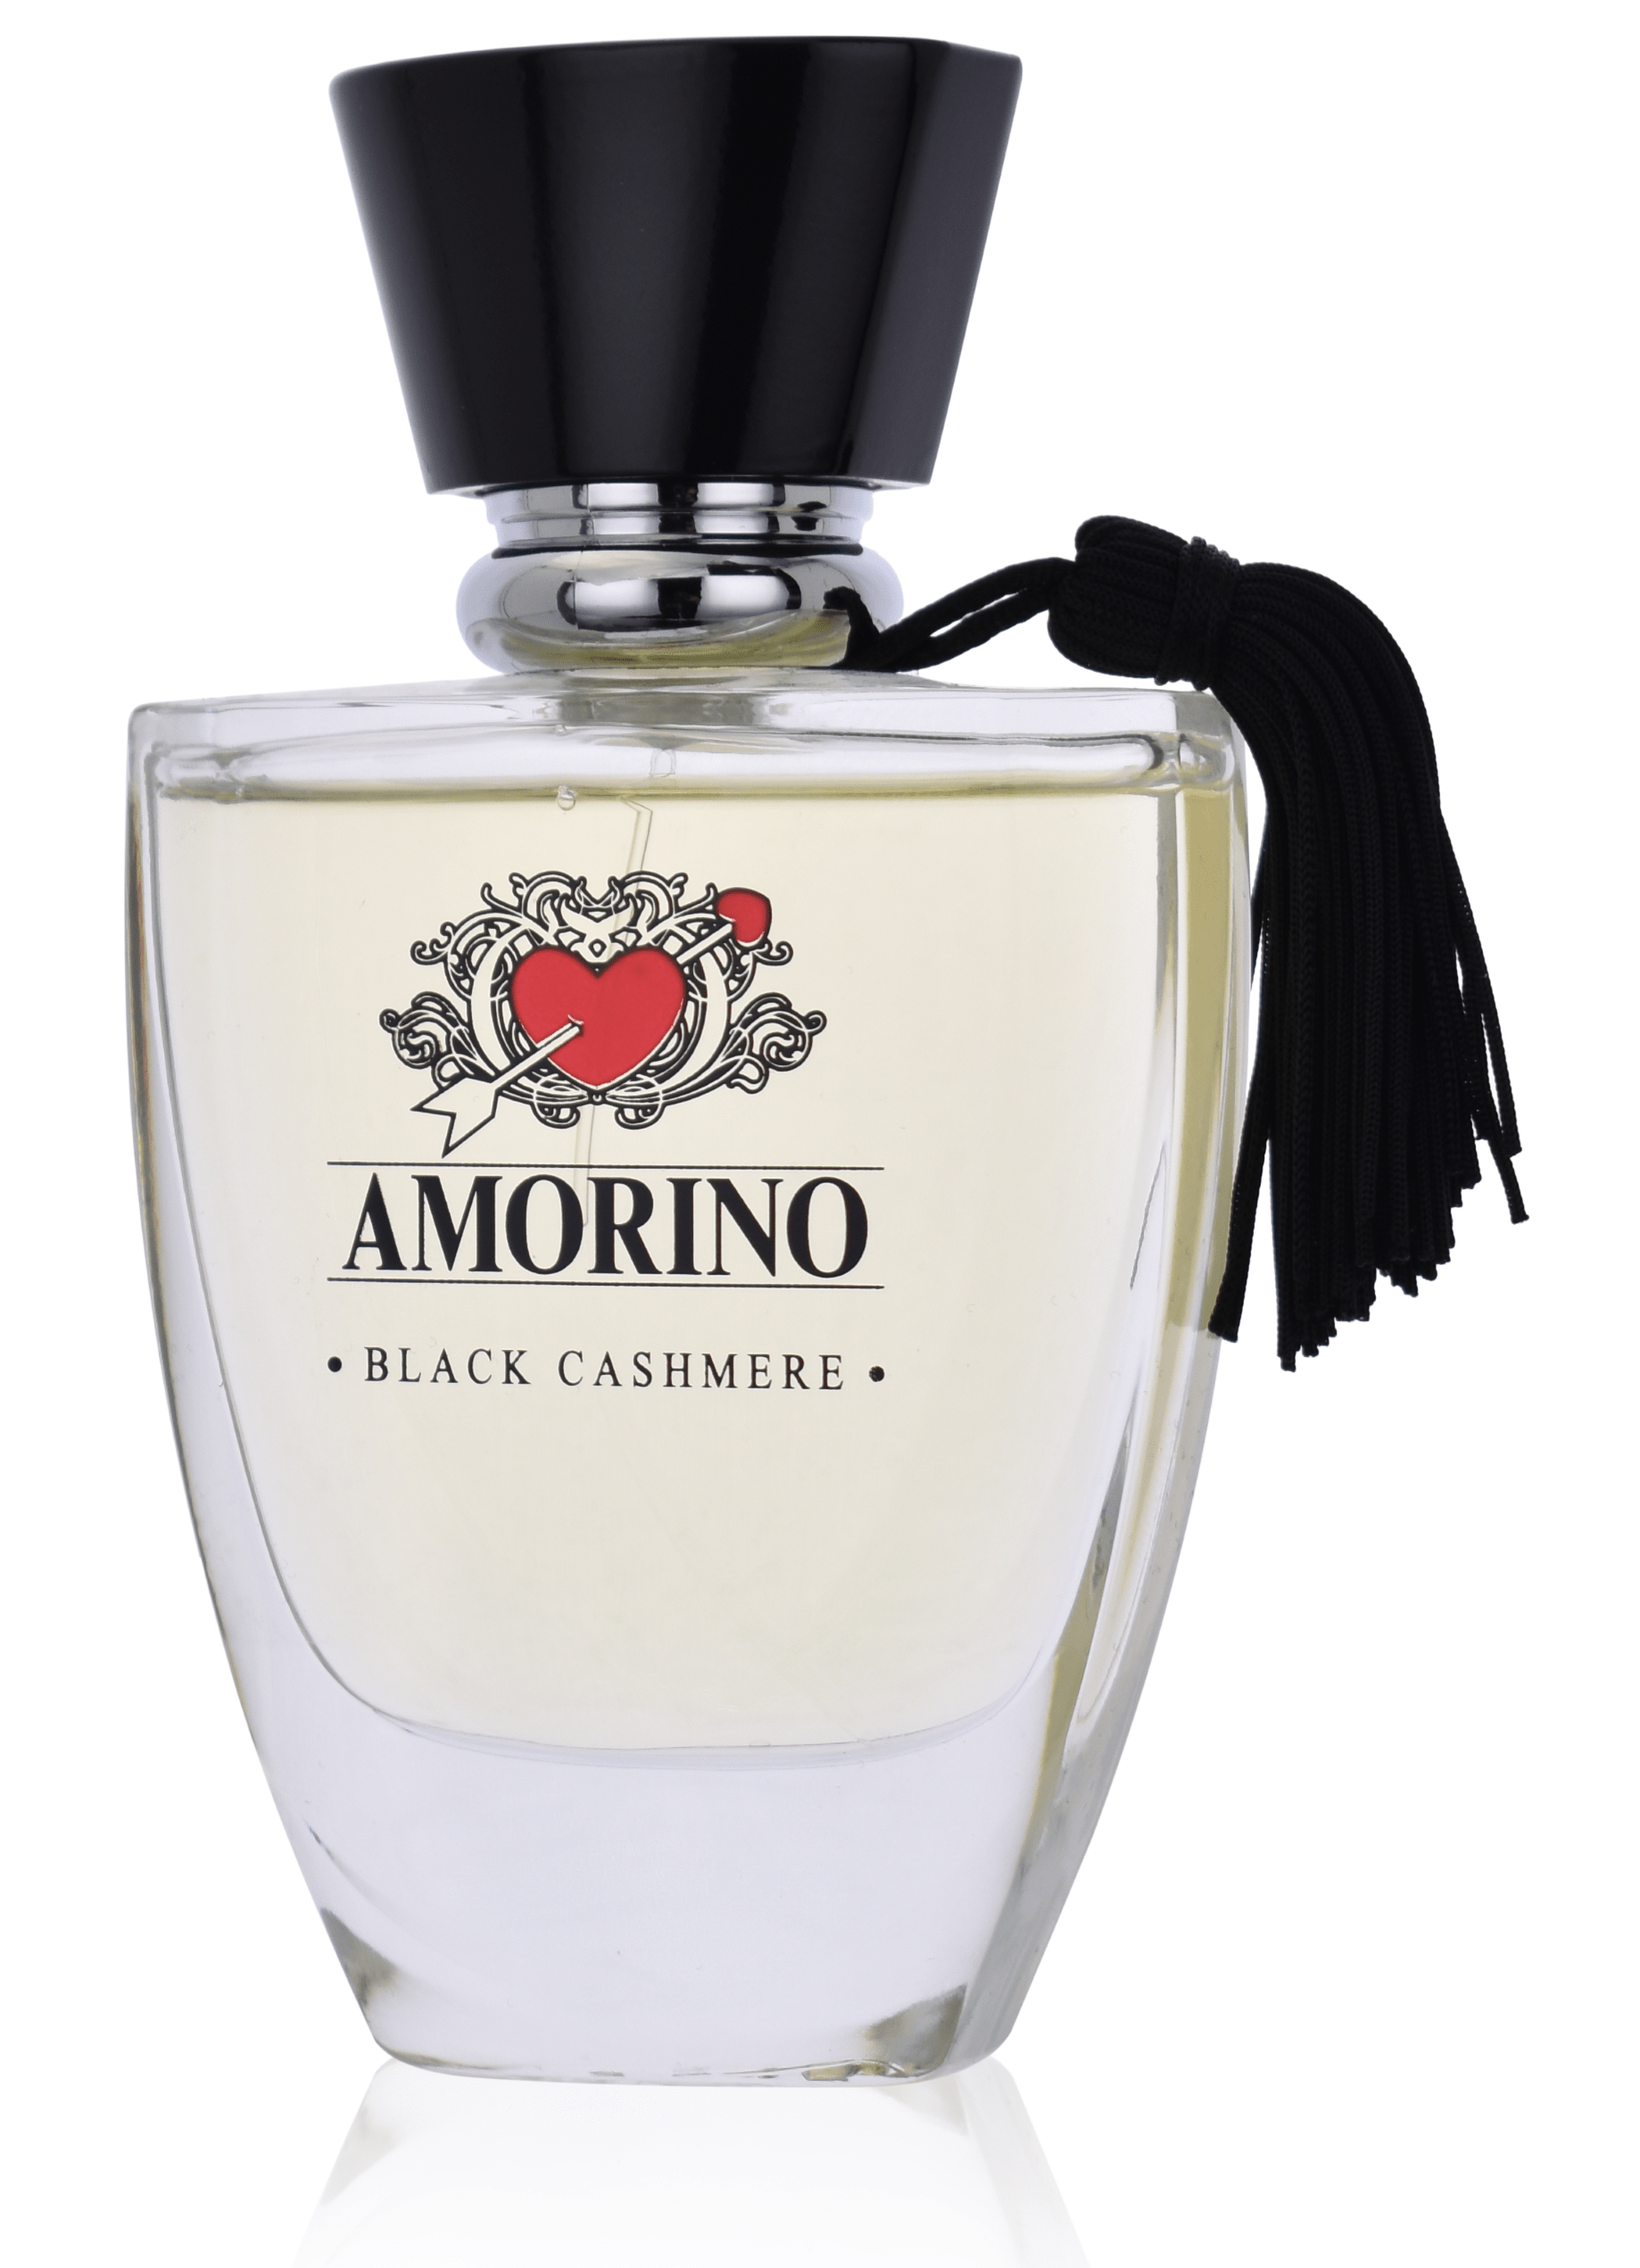 Amorino Prive Black Cashmere 50 ml Eau de Parfum    